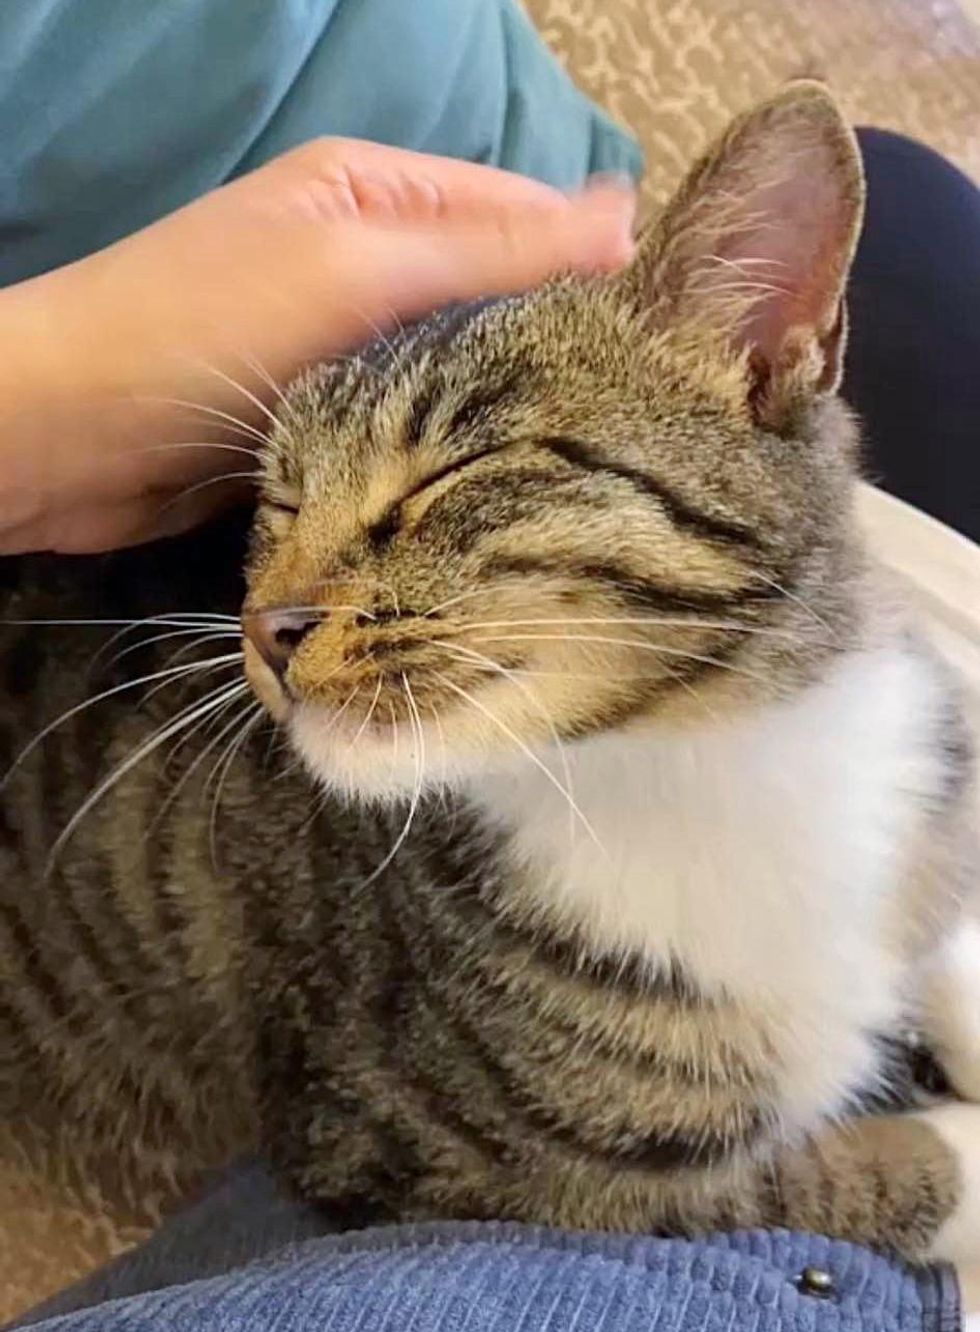 snuggly kitten lap time